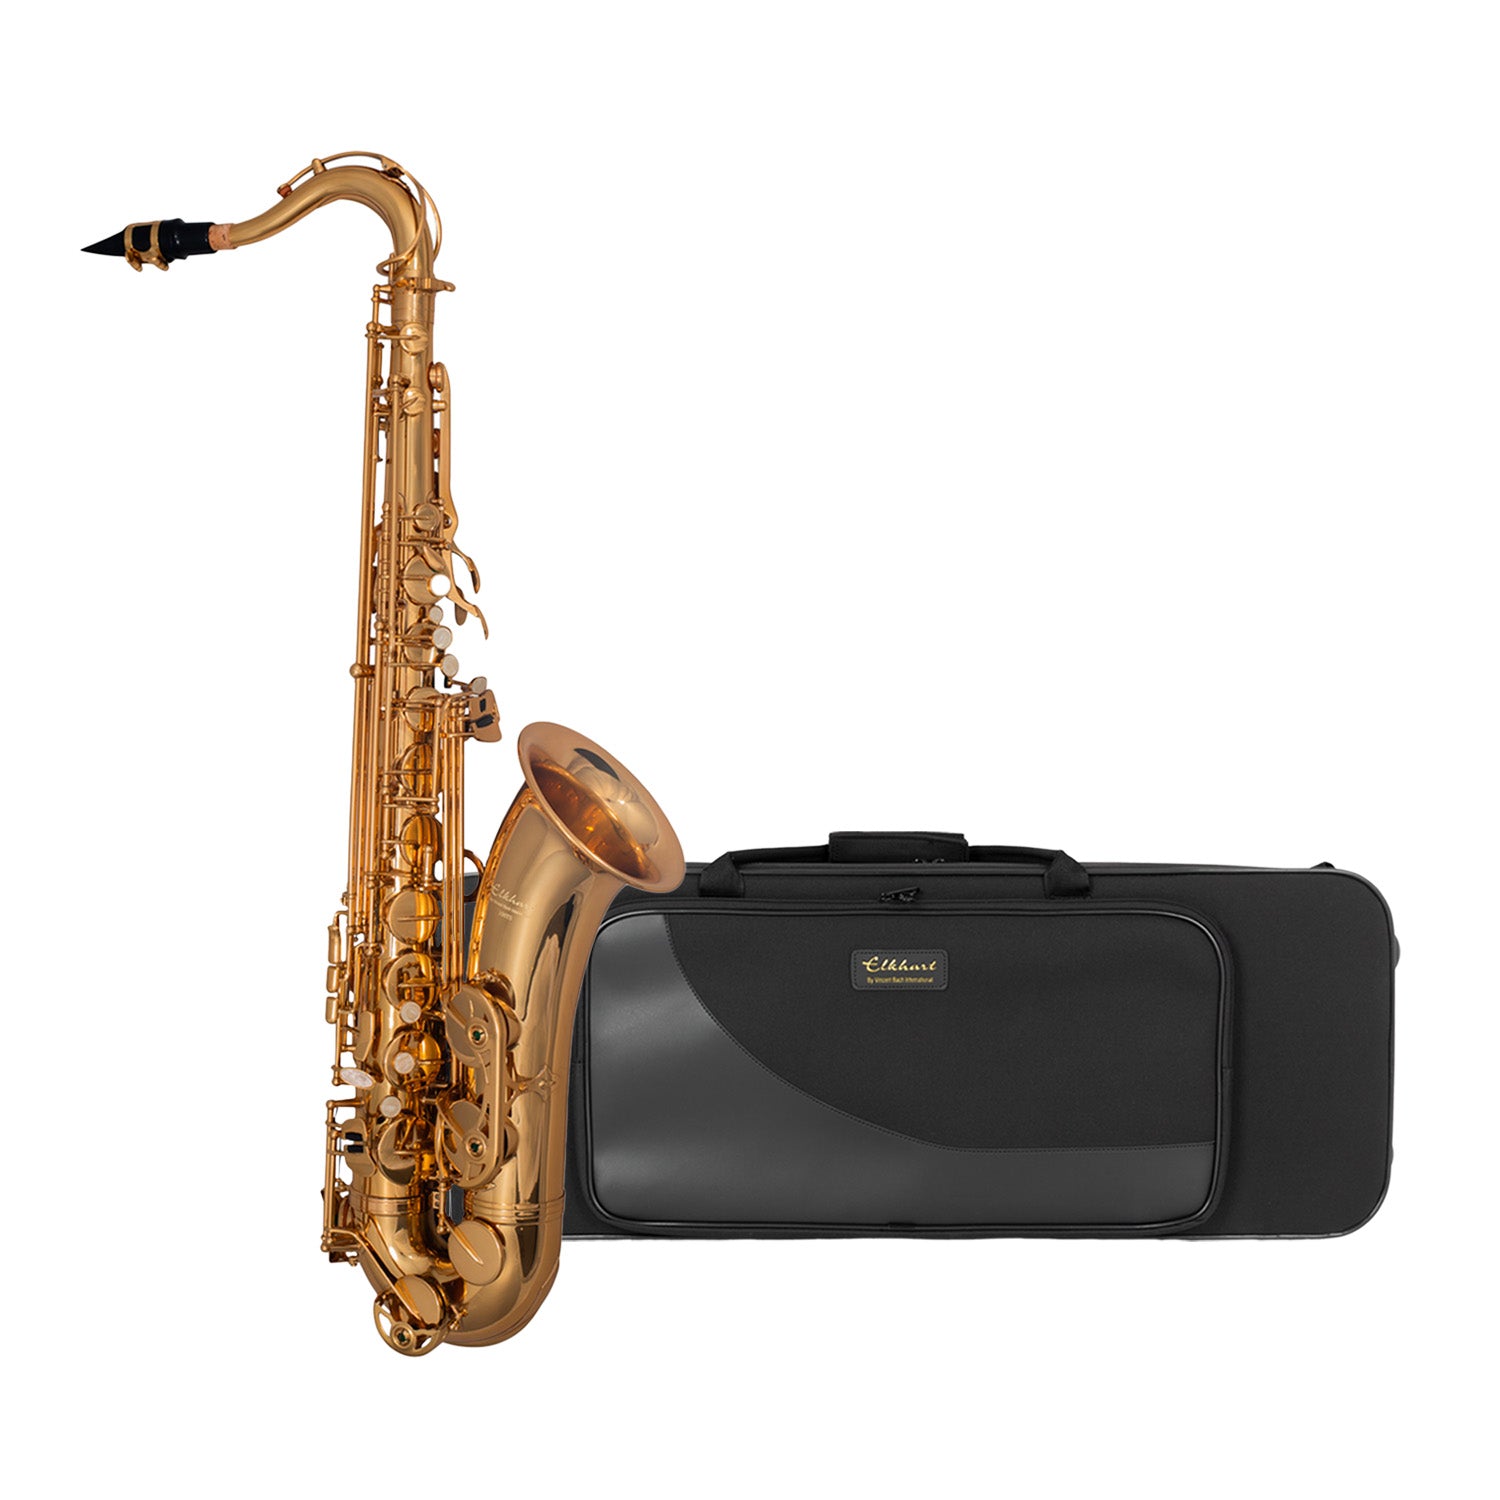 Elkhart 100TS student Bb tenor saxophone outfit